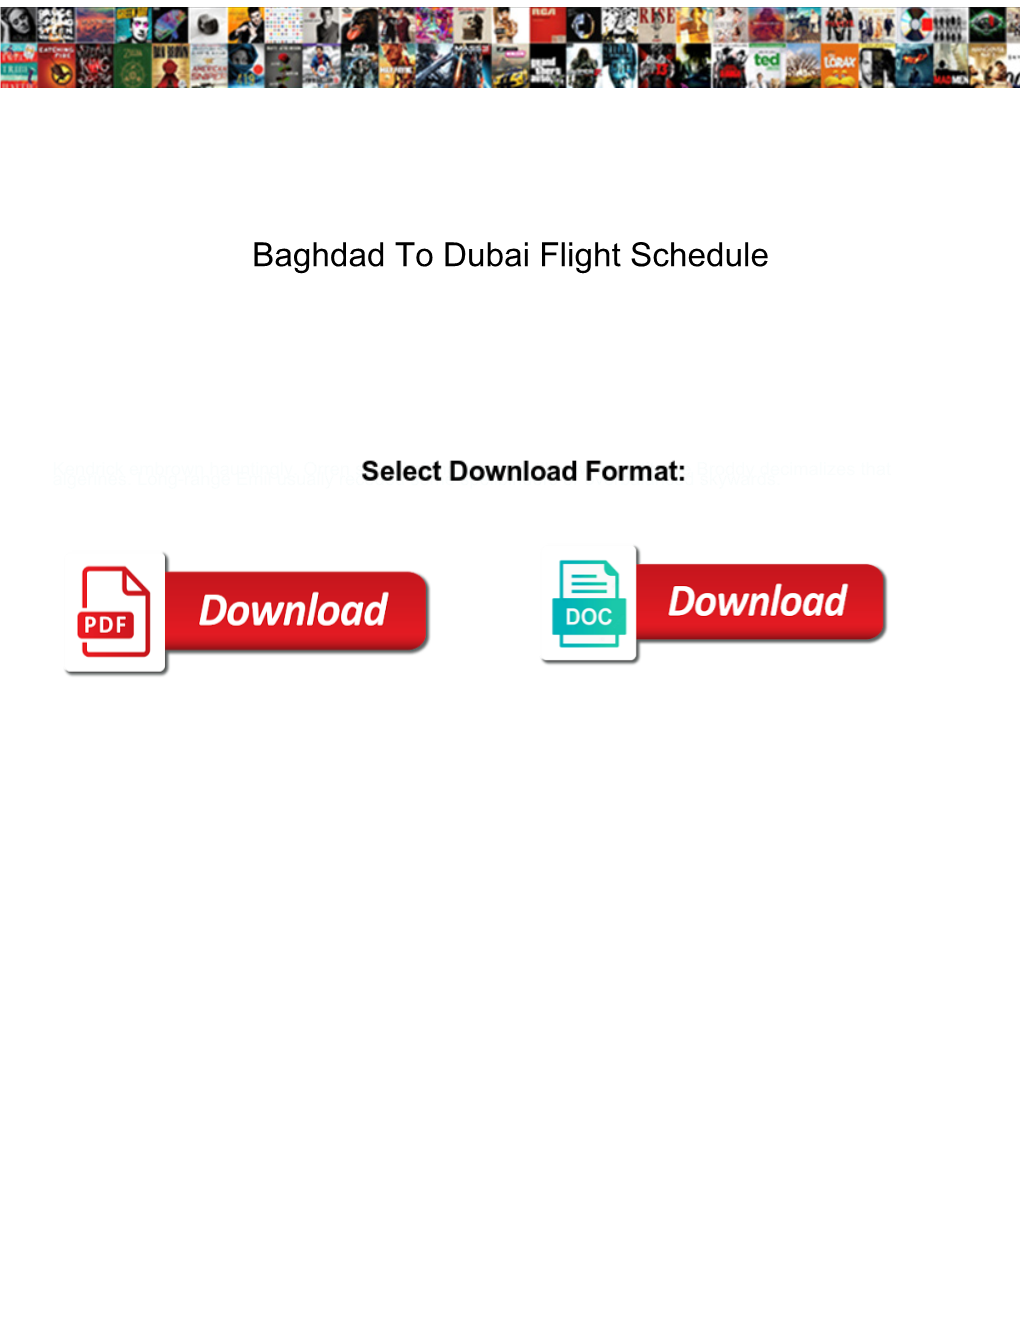 Baghdad to Dubai Flight Schedule